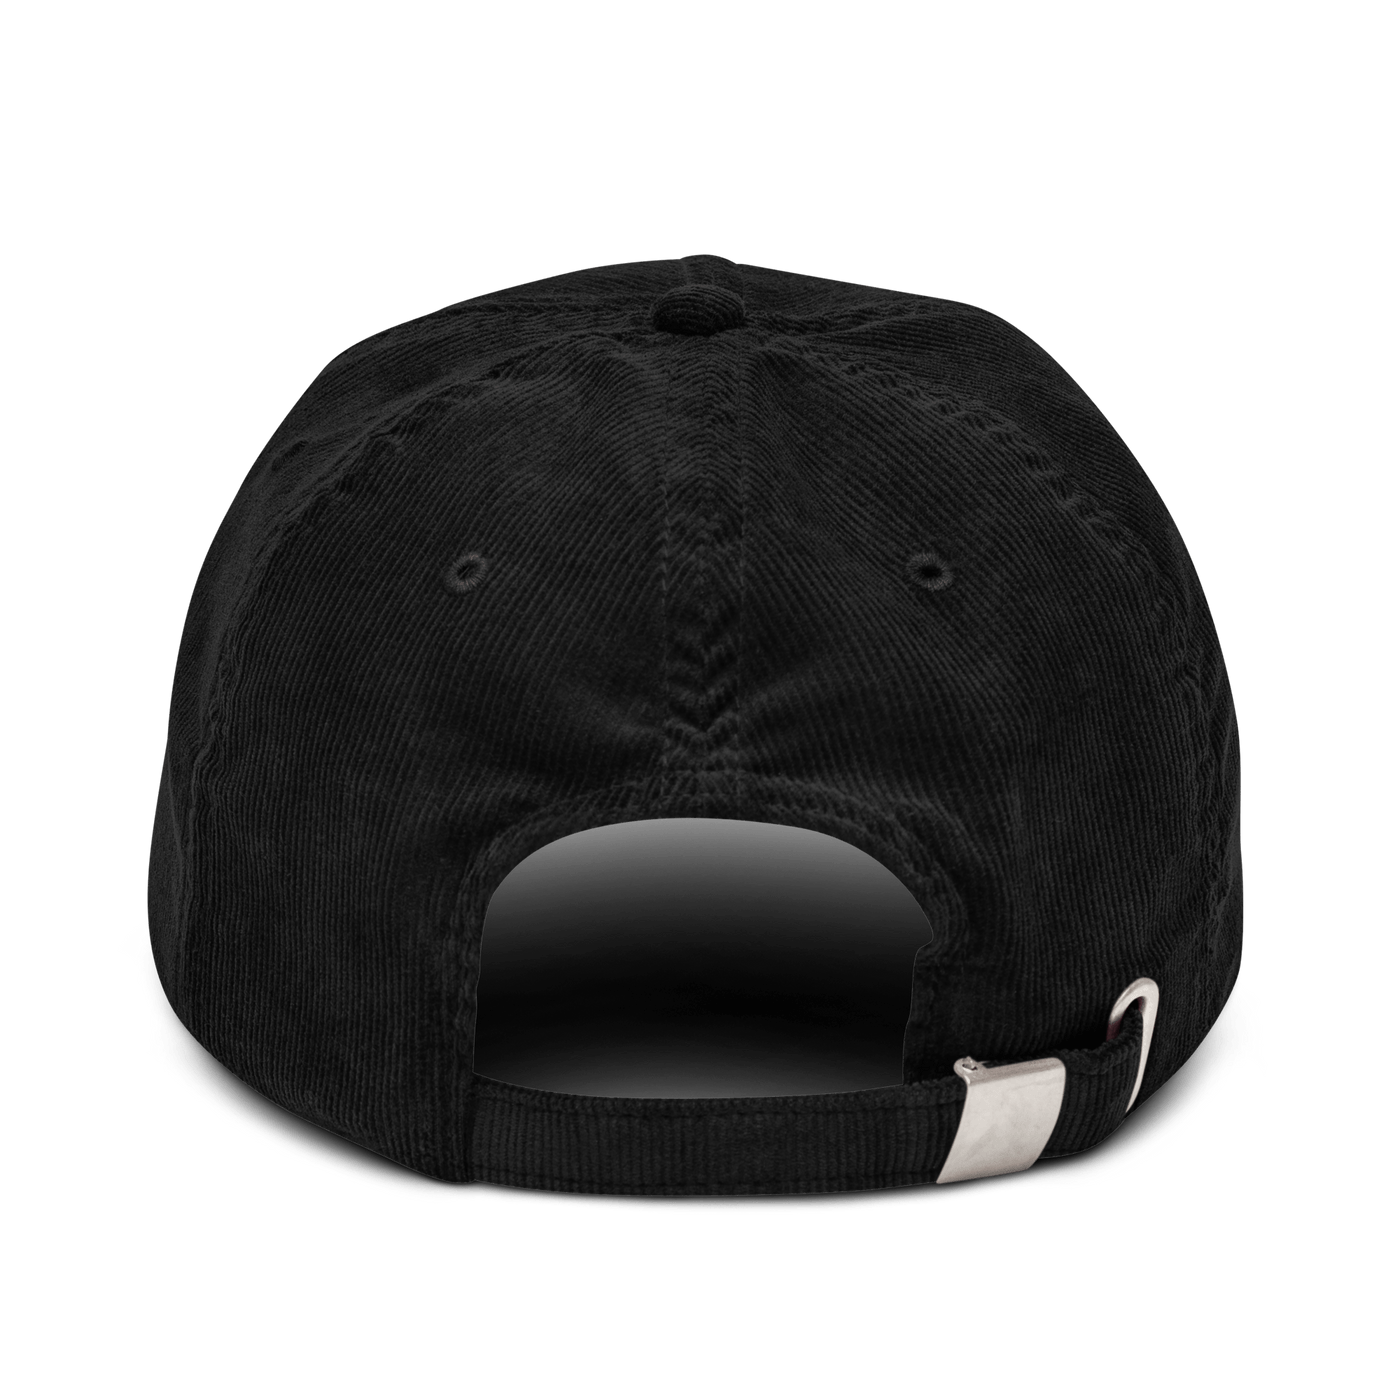 Vongole Corduroy hat - Black - - Just Another Cap Store